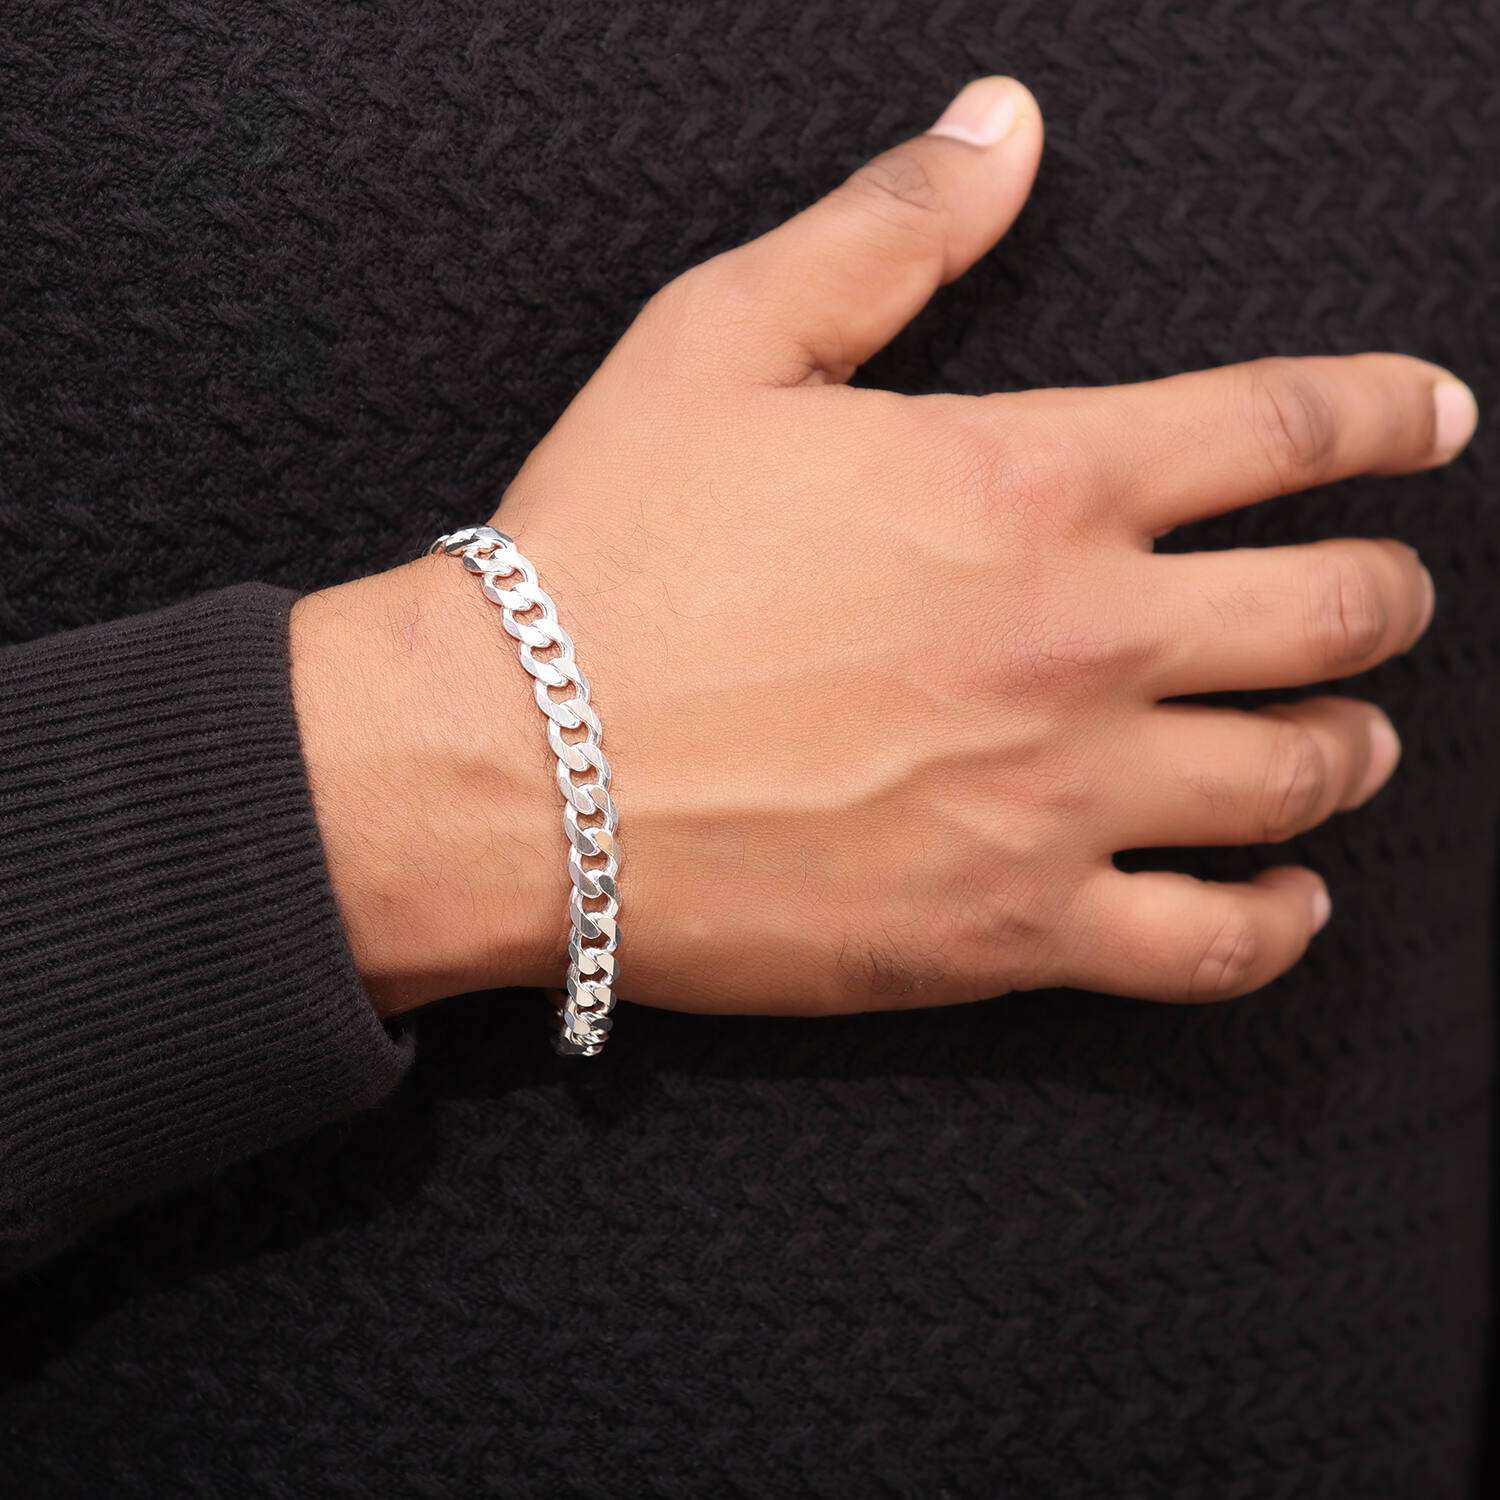 Thin Silver Bracelet - Minimalist Silver Bracelets For Men | By  Twistedpendant